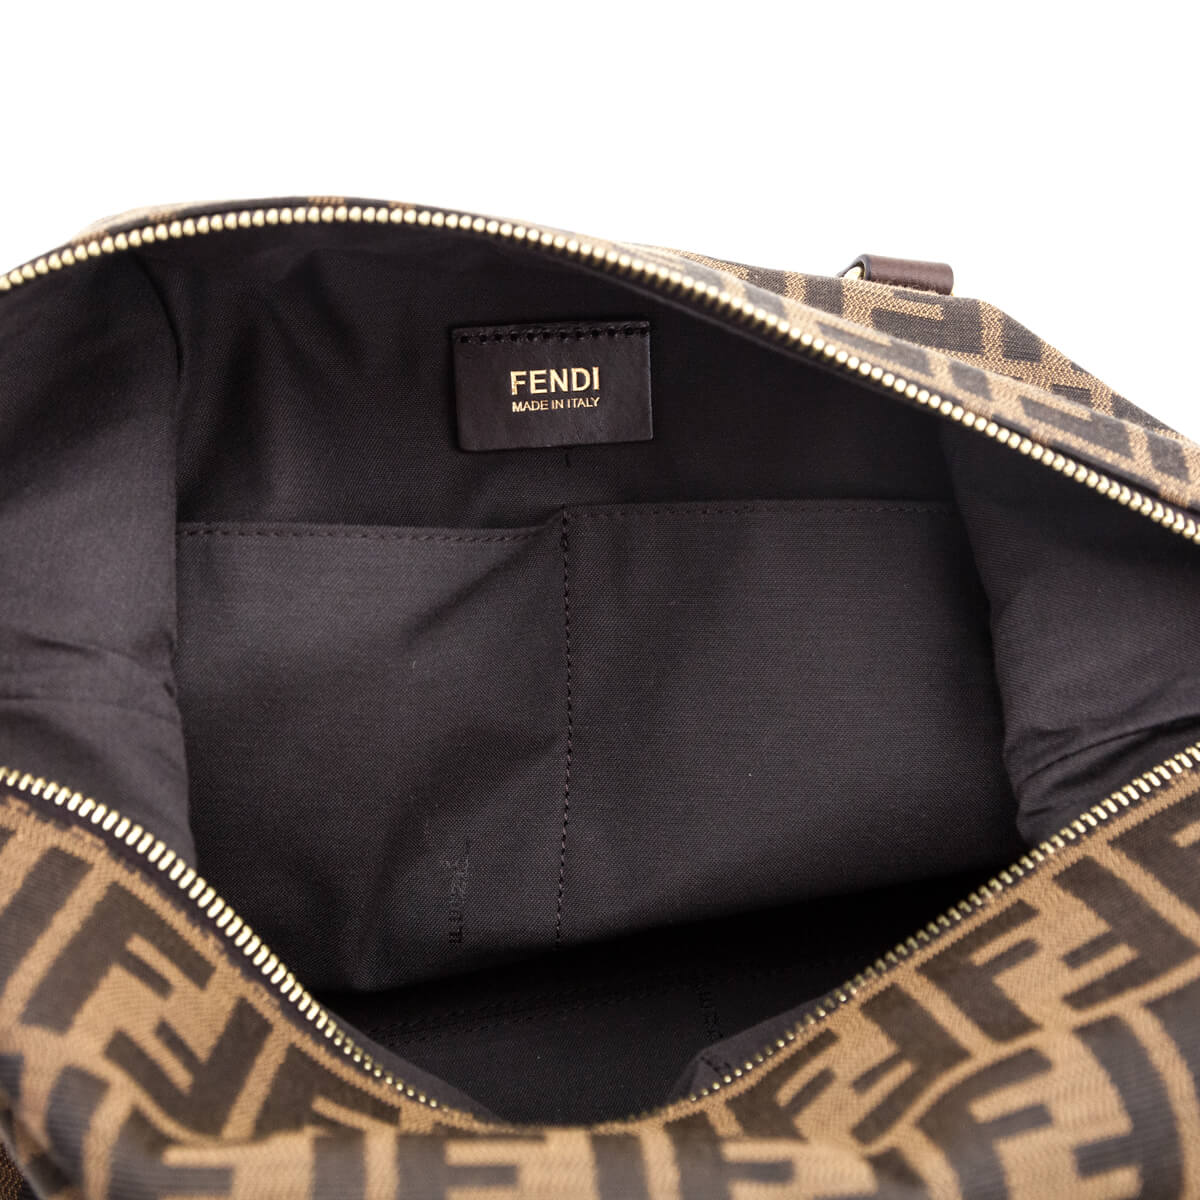 Authentic Fendi Zucca Brown Monogram Fabric Bag on sale at JHROP